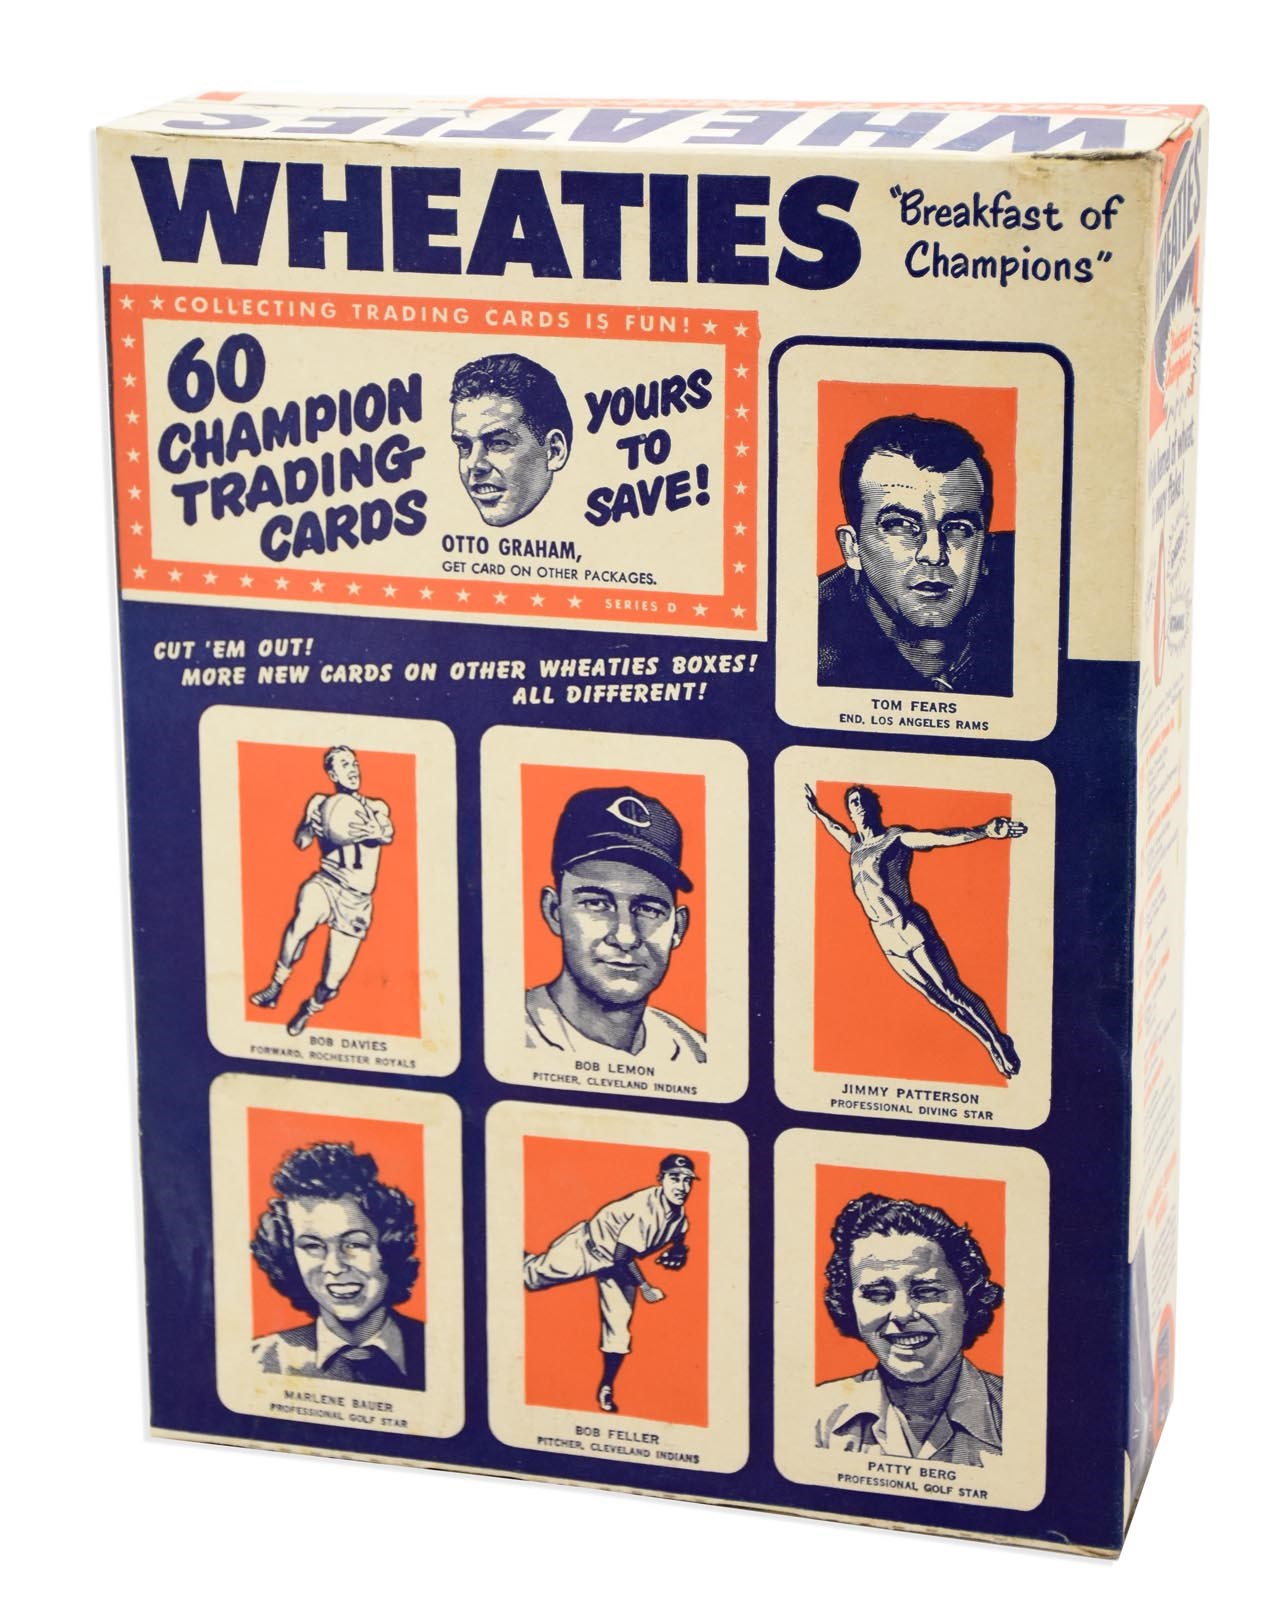 Circa 1950's Wheaties Box with George Mikan